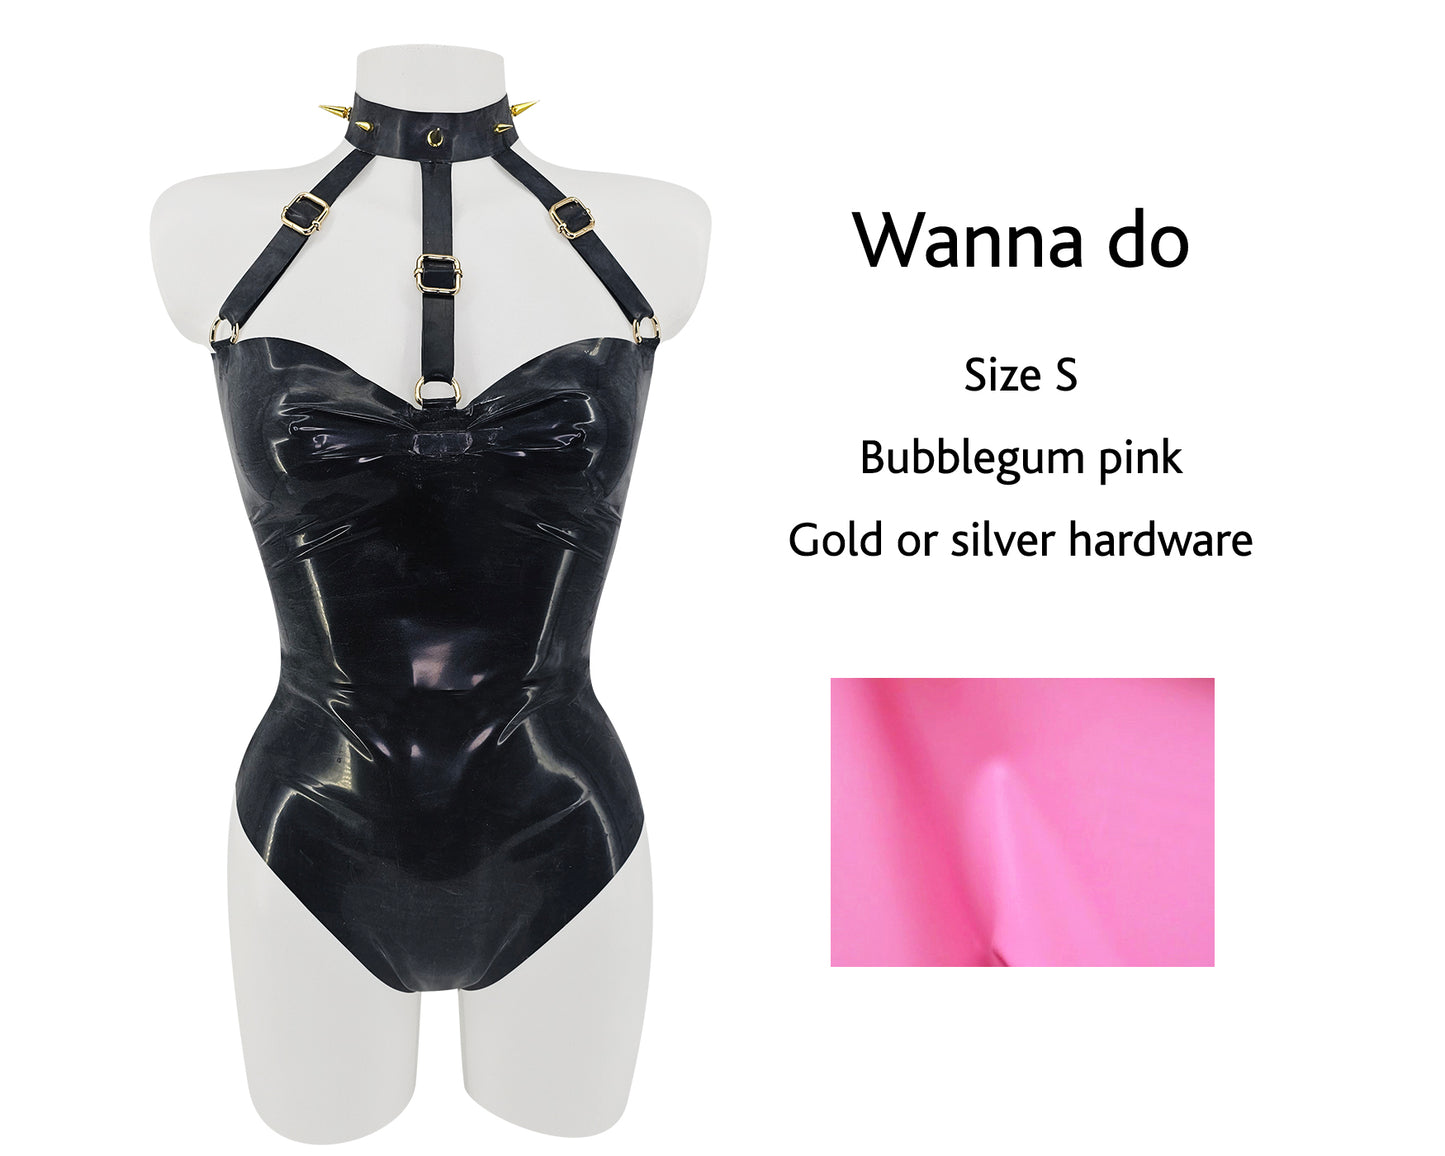 Size S bubblegum pink latex spike harness bandeau bodysuit